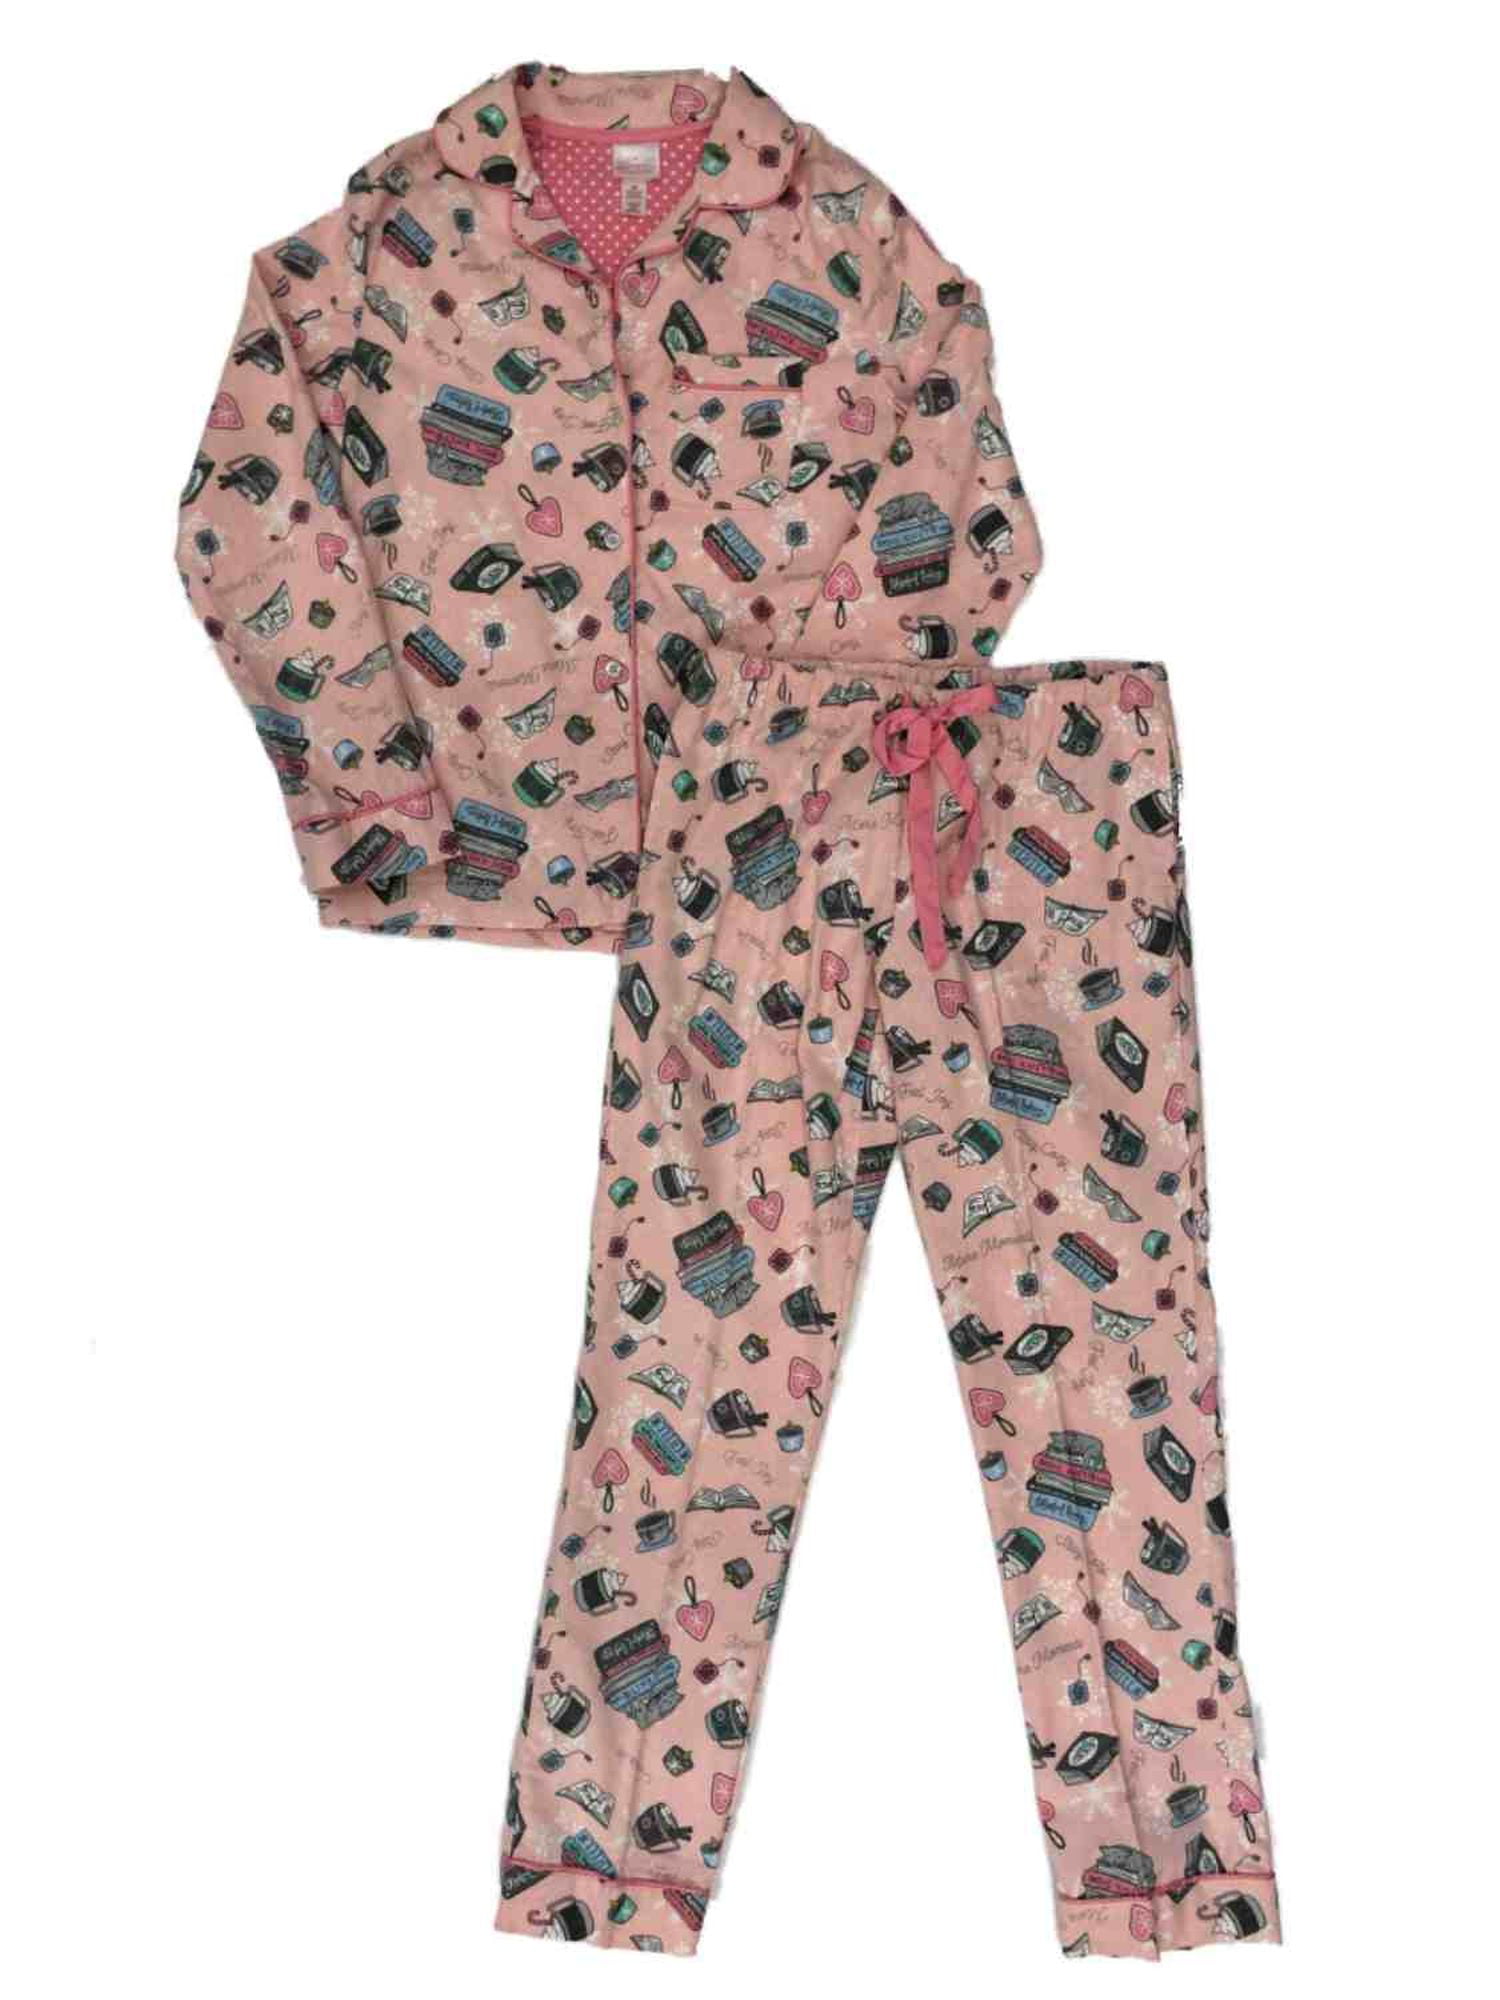 Womens Pink Flannel Kitty Cats & Cocoa Pajamas Holiday Sleep Set